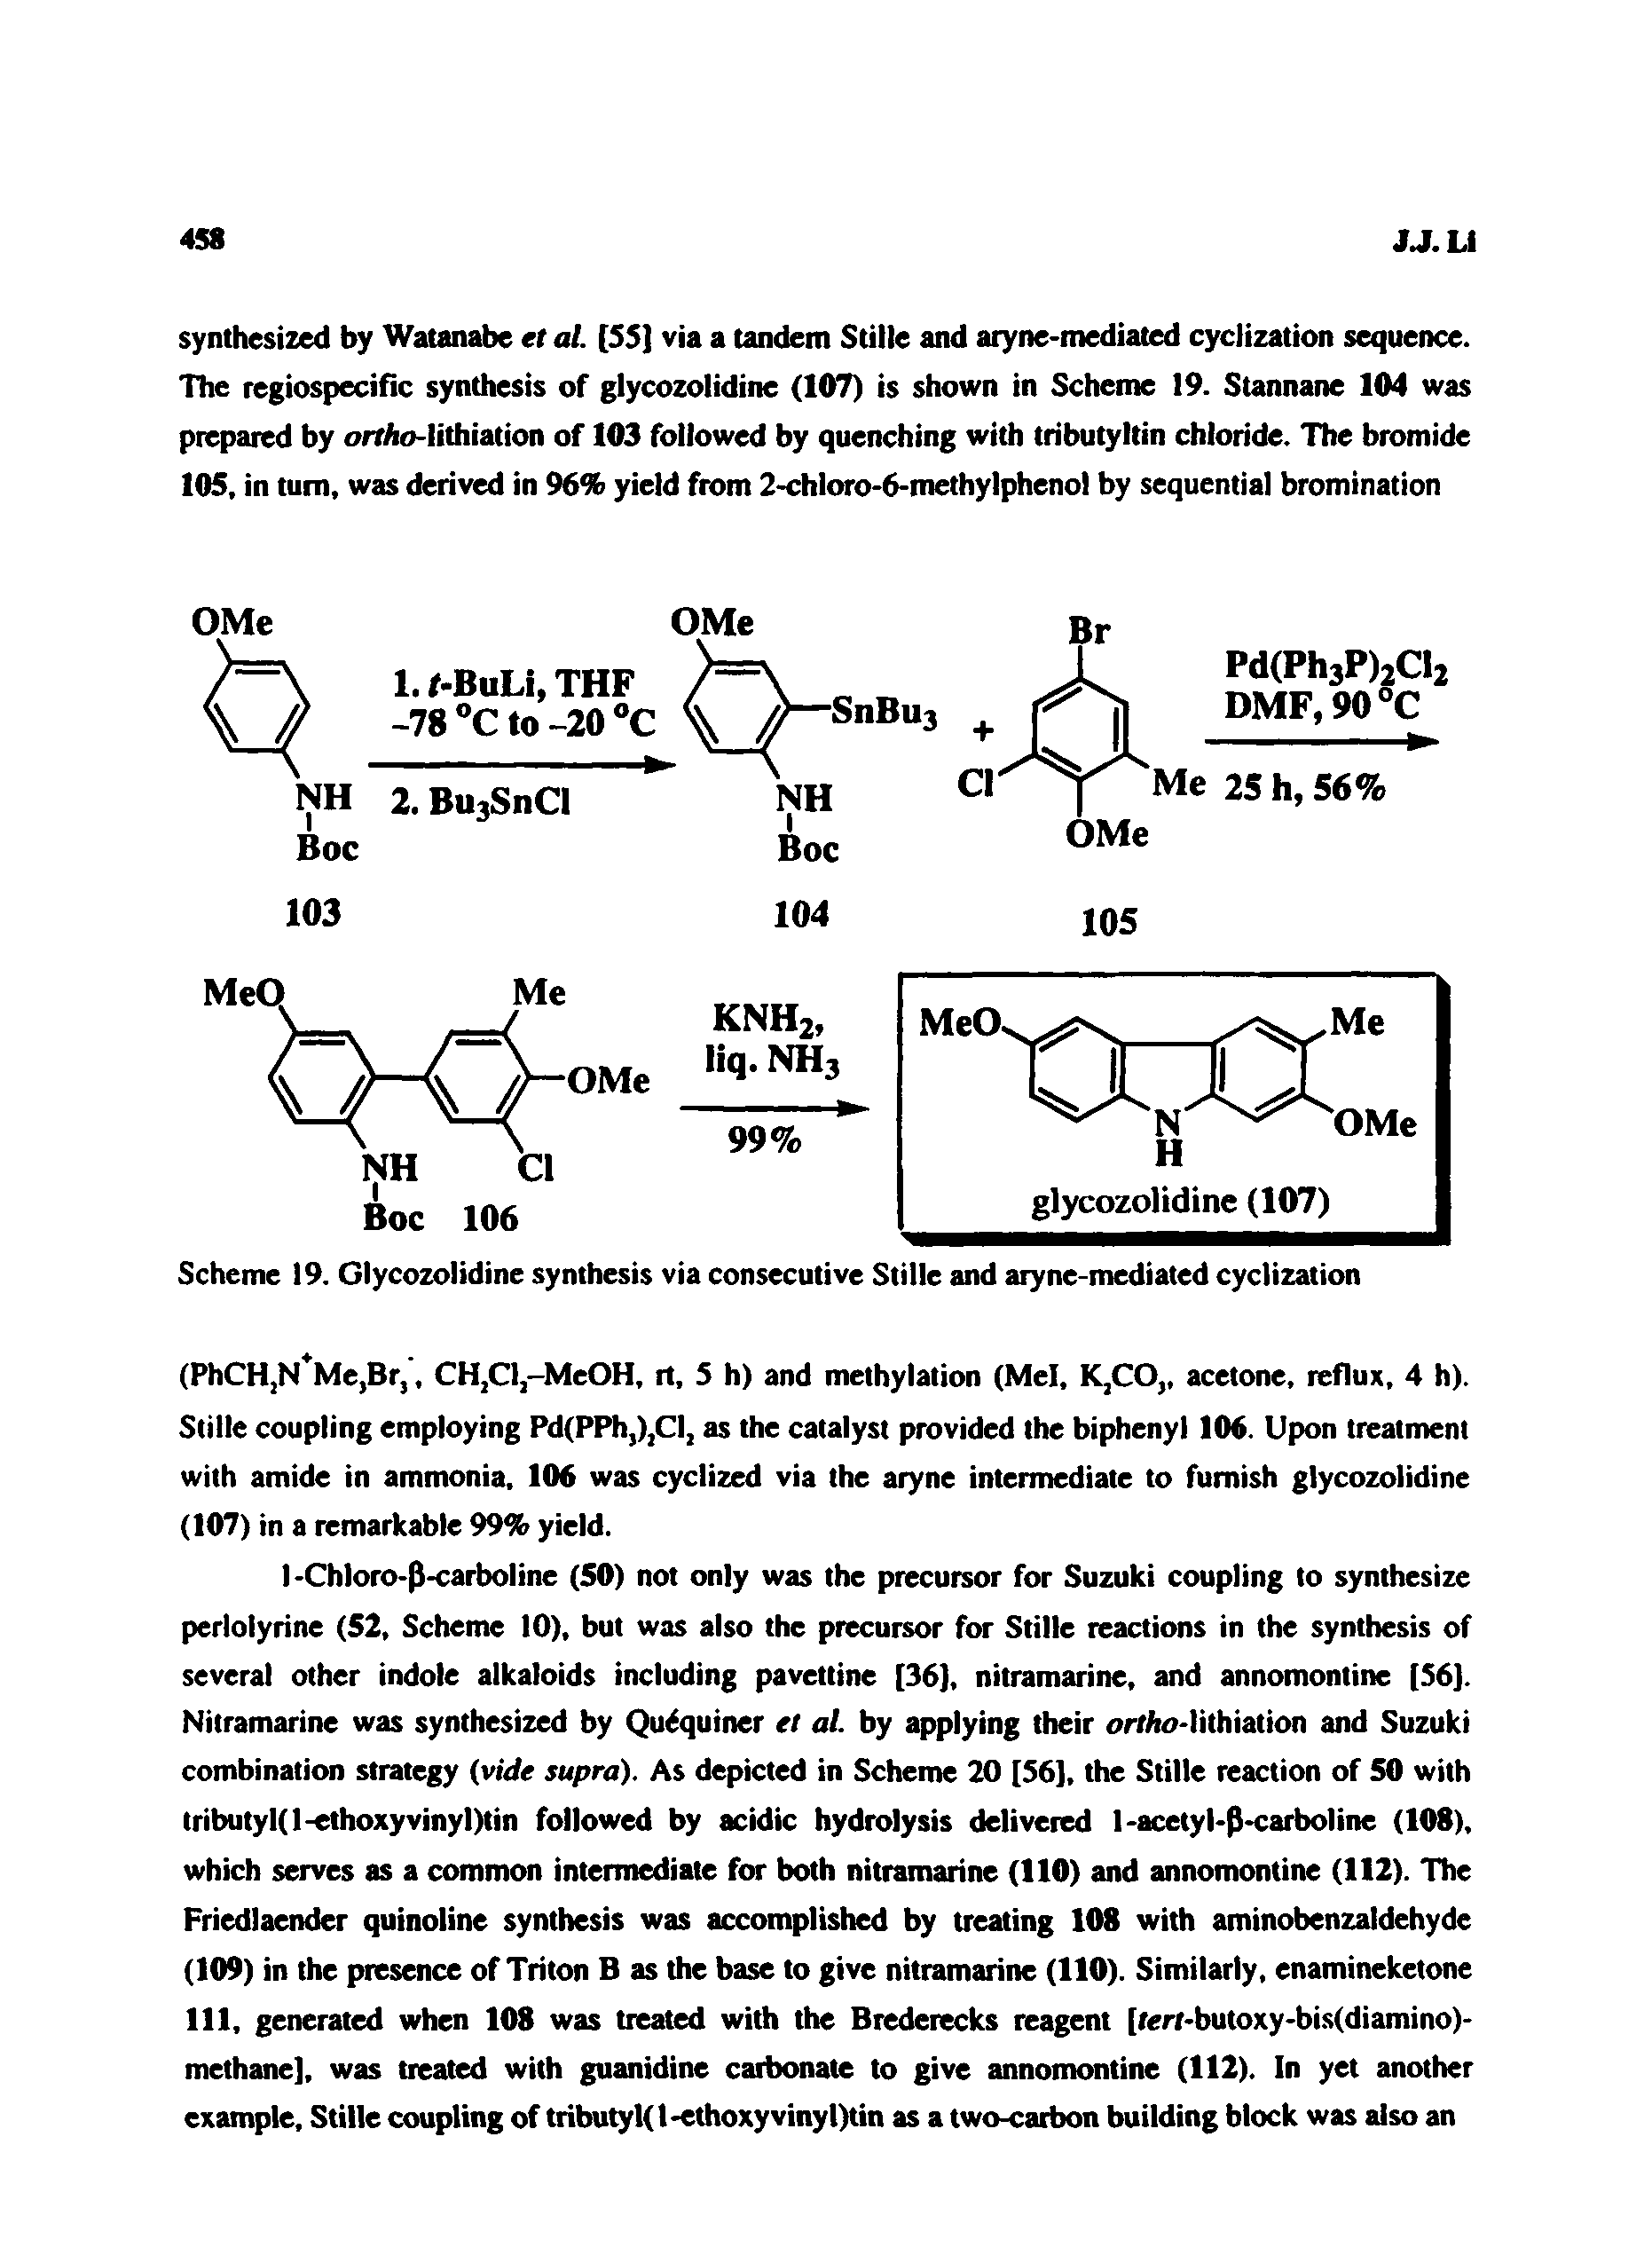 Scheme 19. Glycozolidine synthesis via consecutive Stille and aryne-mediated cyclization...